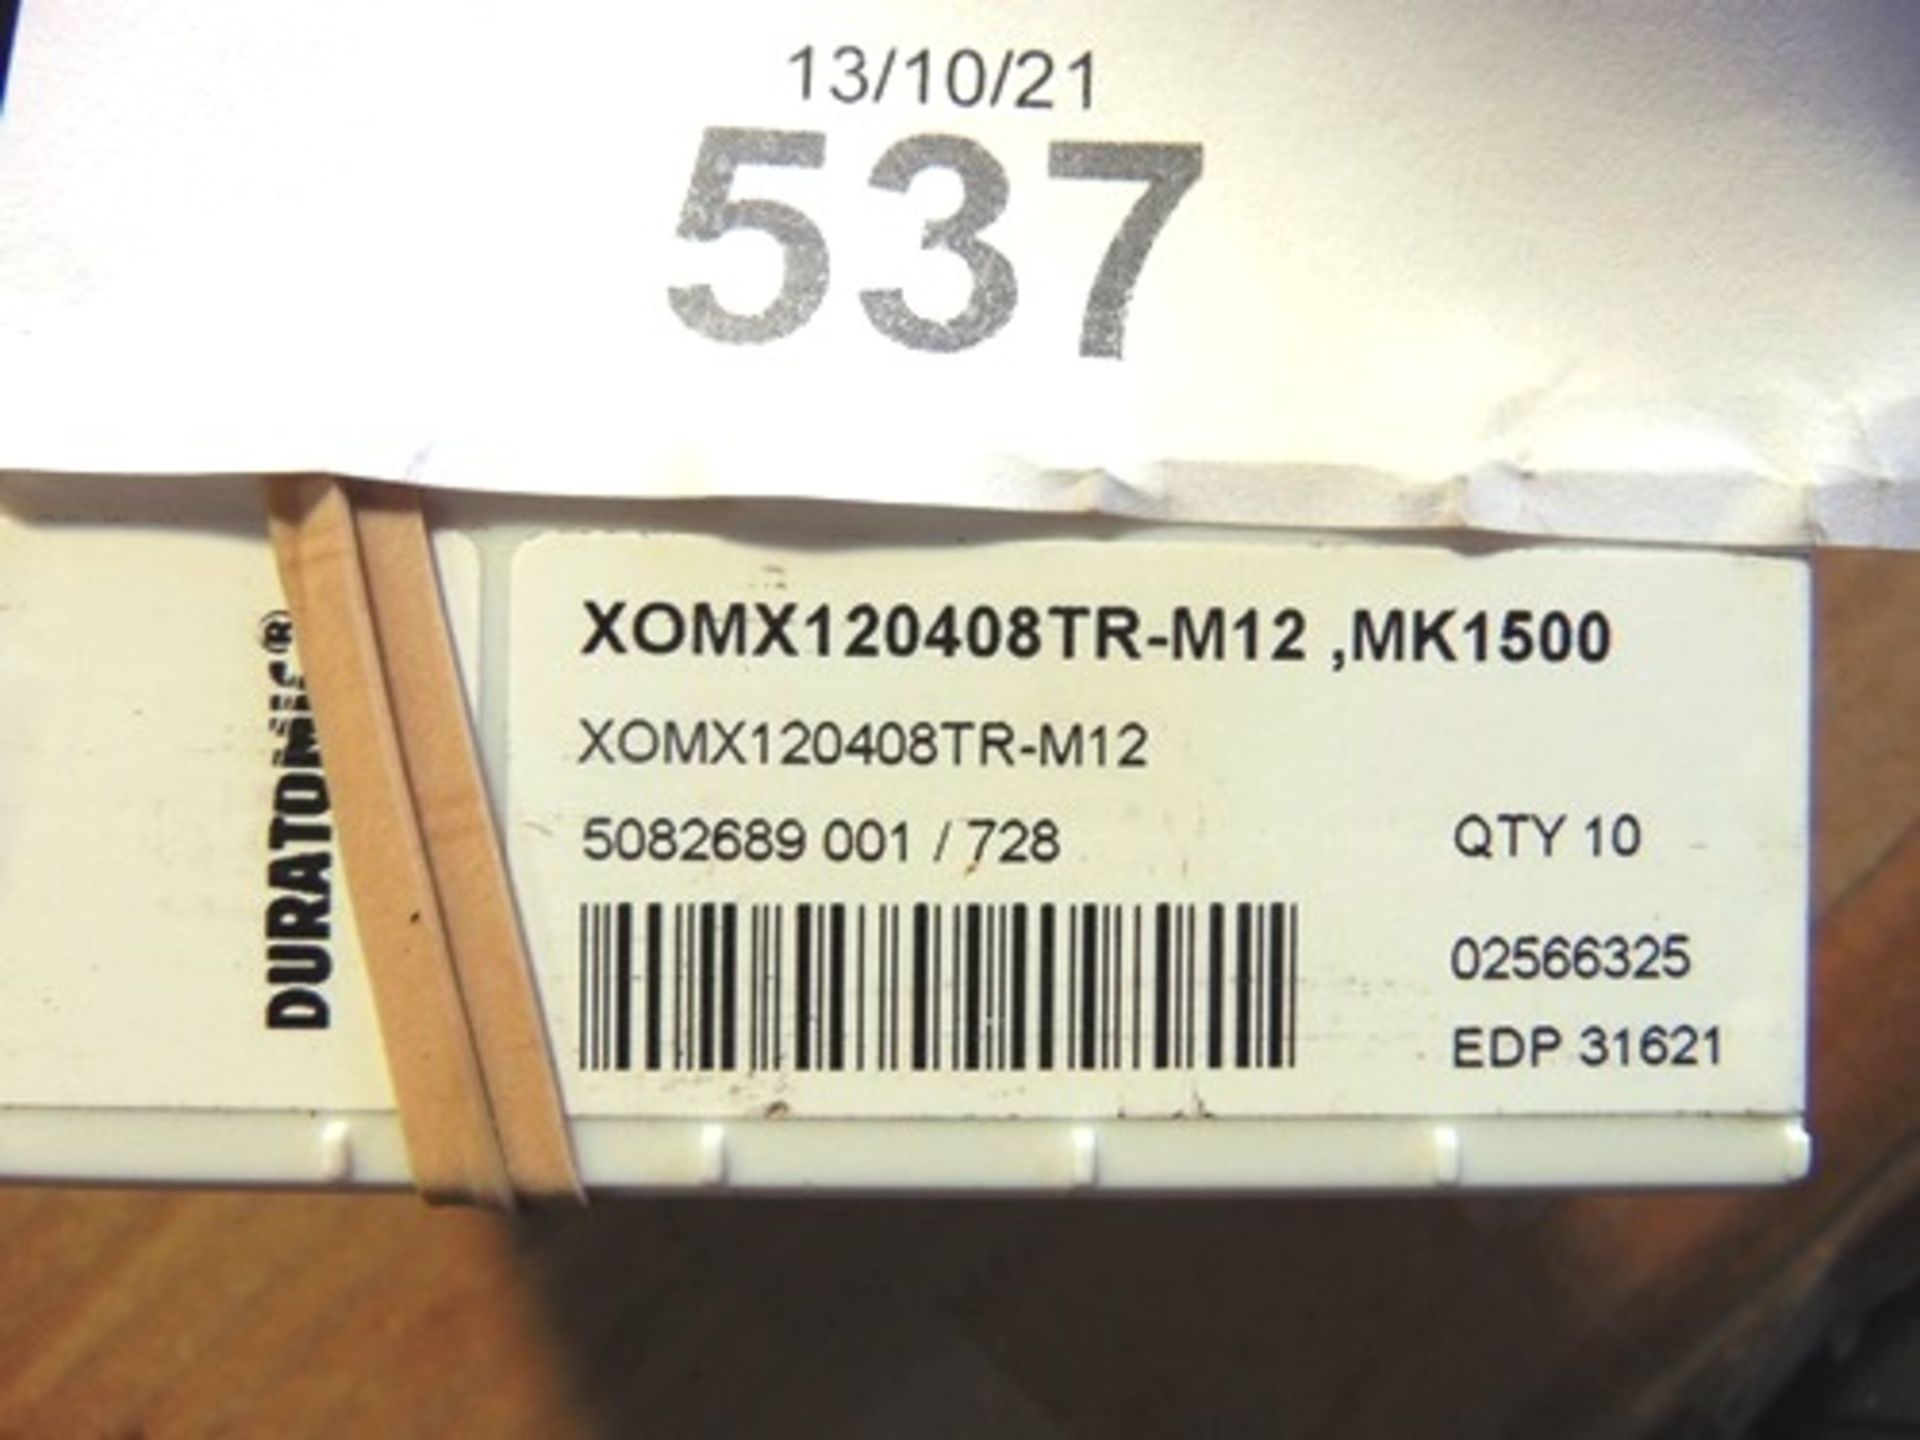 7 x packs of 10 Seco metal lathe inserts XOMX120408TR-M12.NK1500 - Grade B (SW1B)